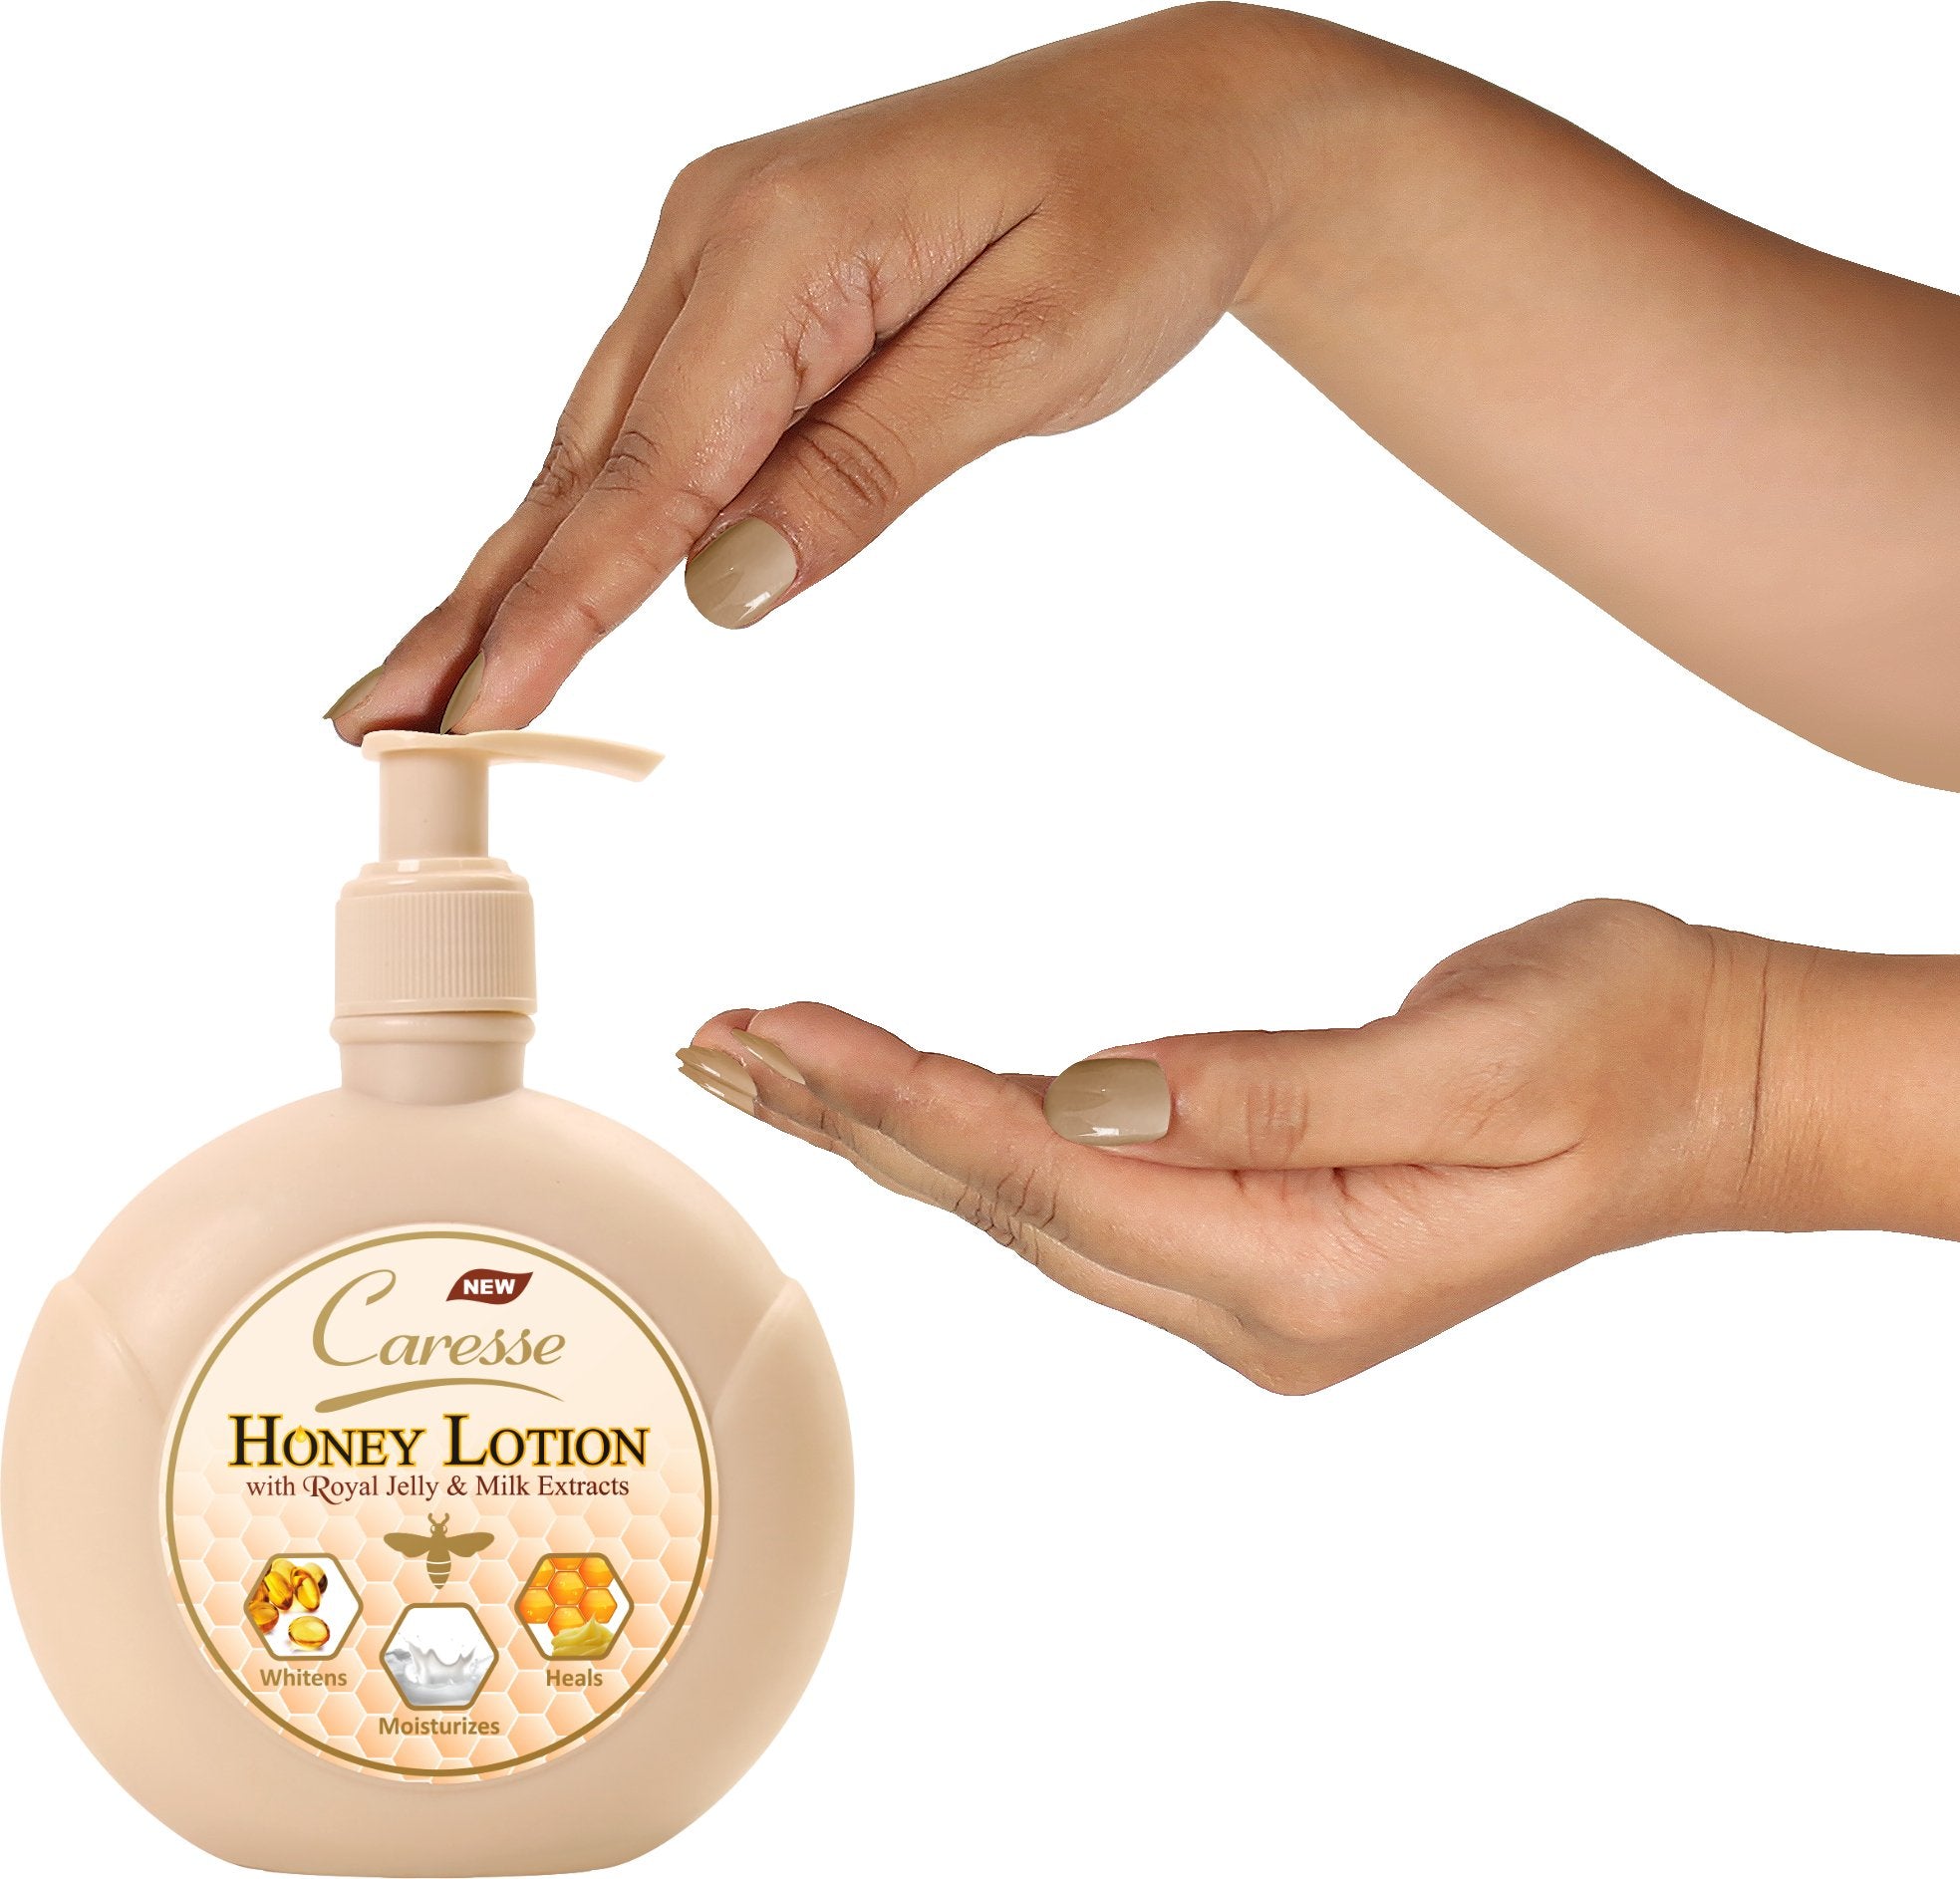 Best Caresse Honey Lotion Online In Pakistan - Moisturizing Lotion